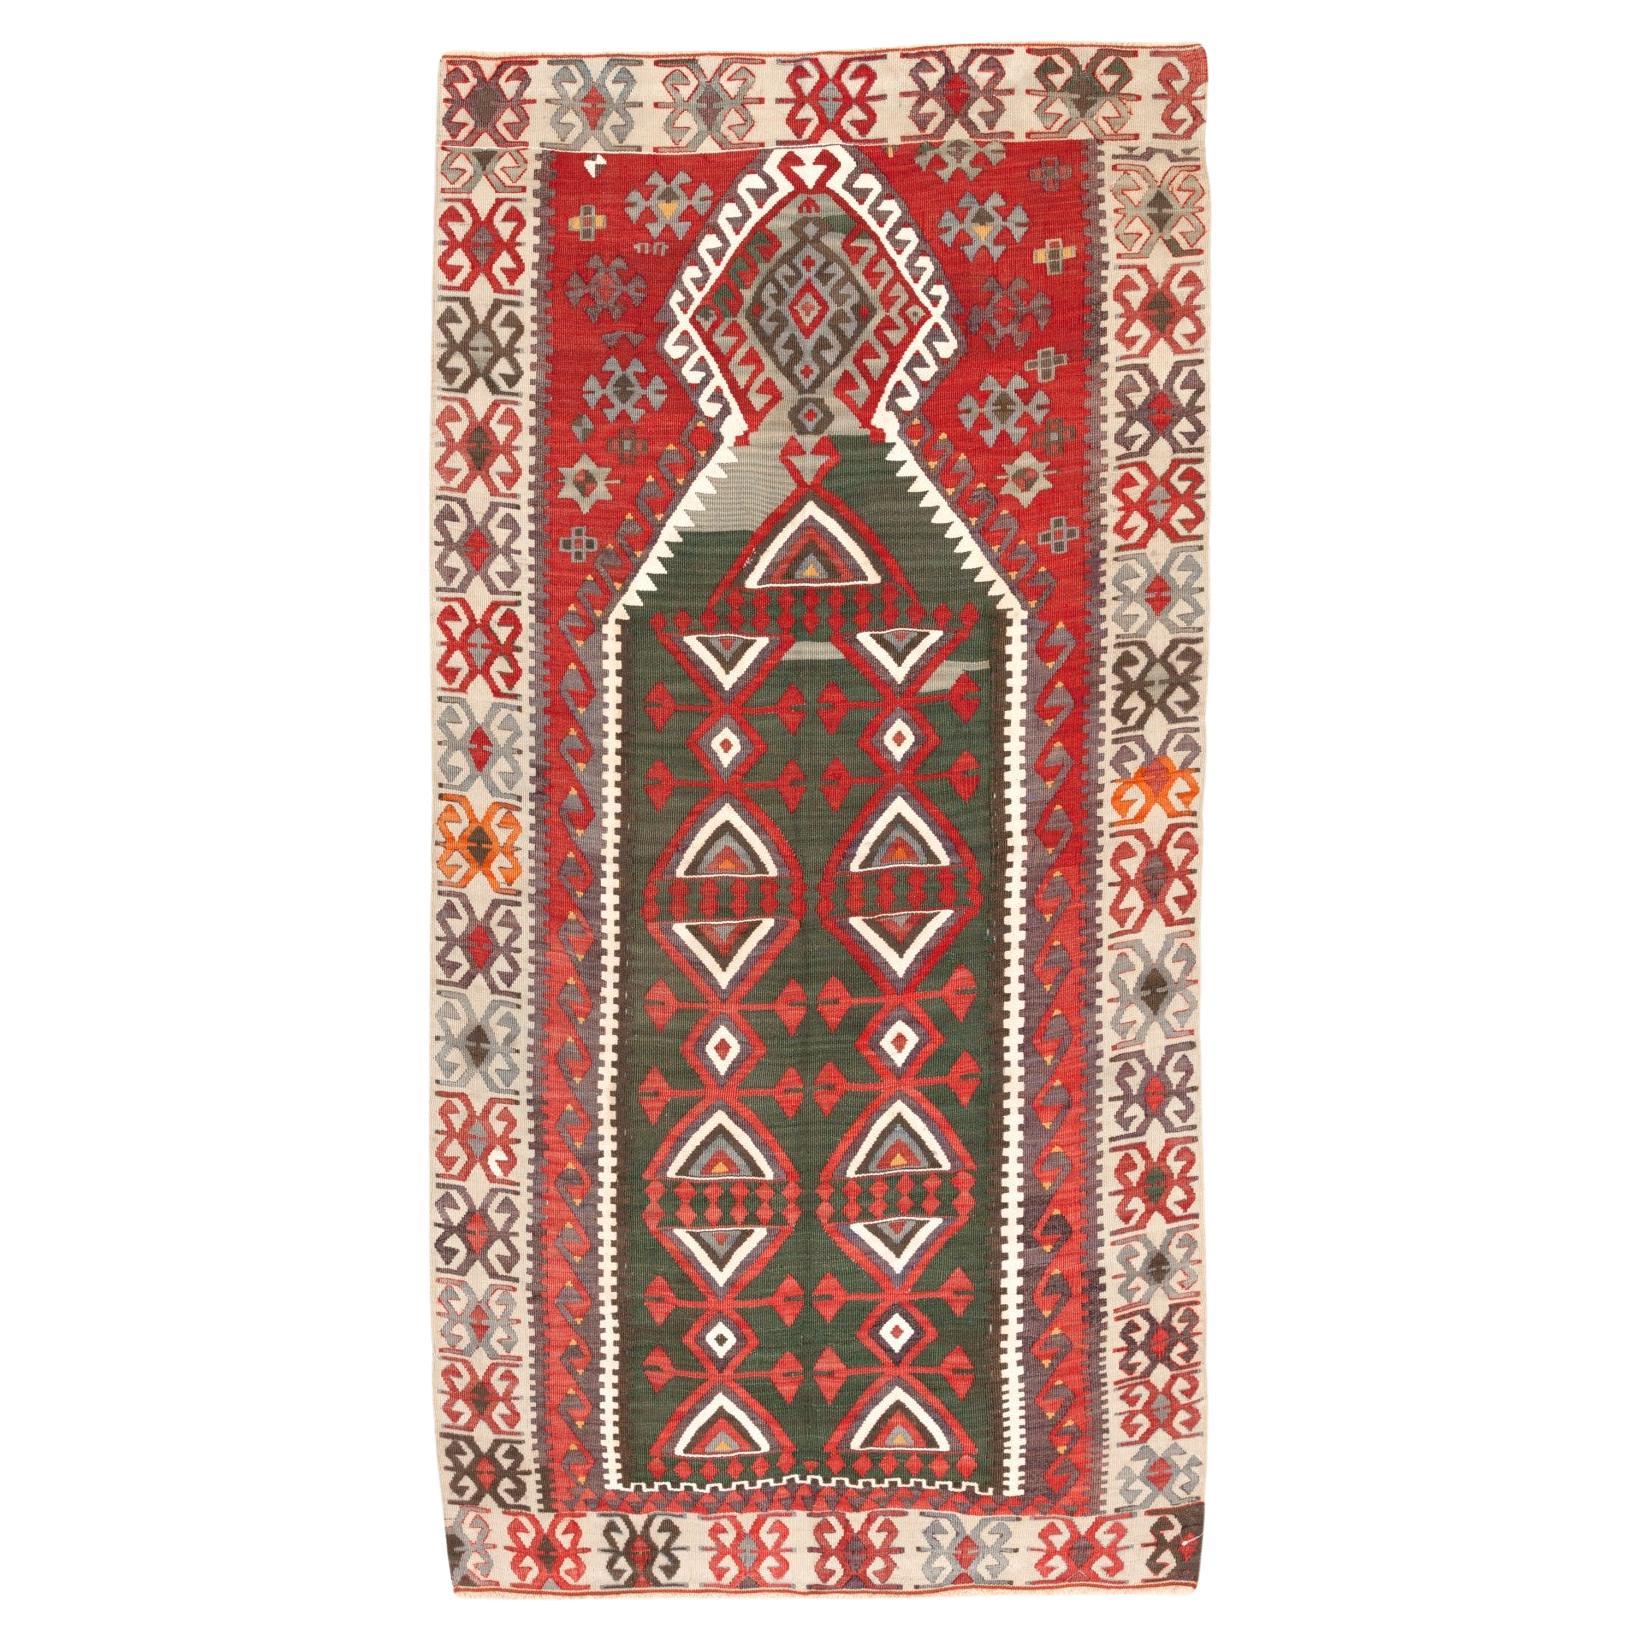 Antique Cankiri Kilim Rug Wool Old Vintage Central Anatolian Turkish Carpet